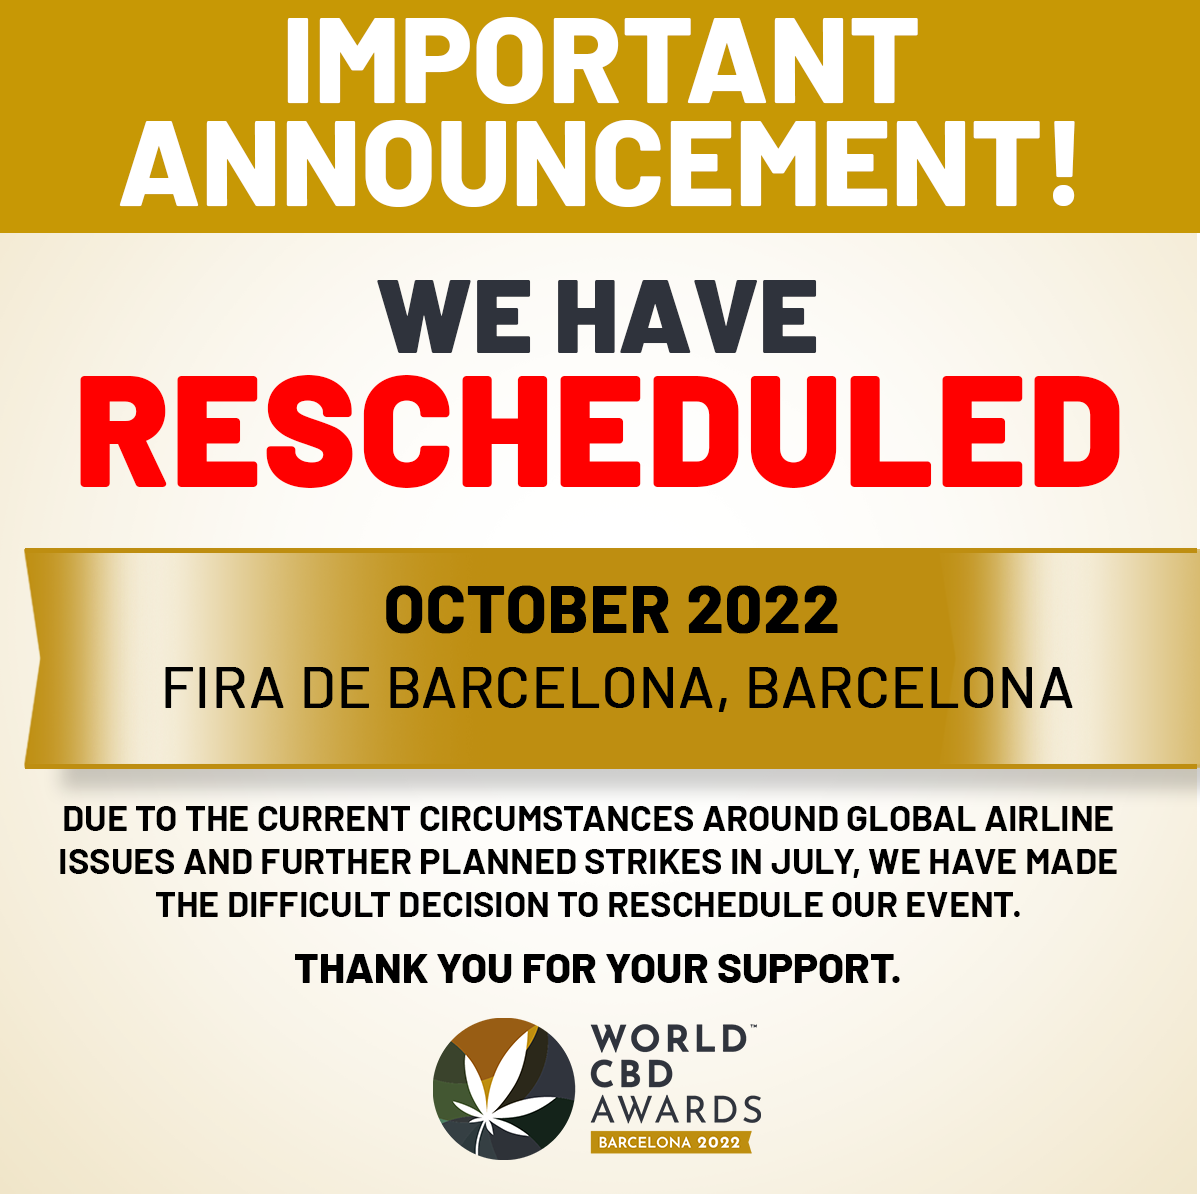 World CBD Awards Postponed